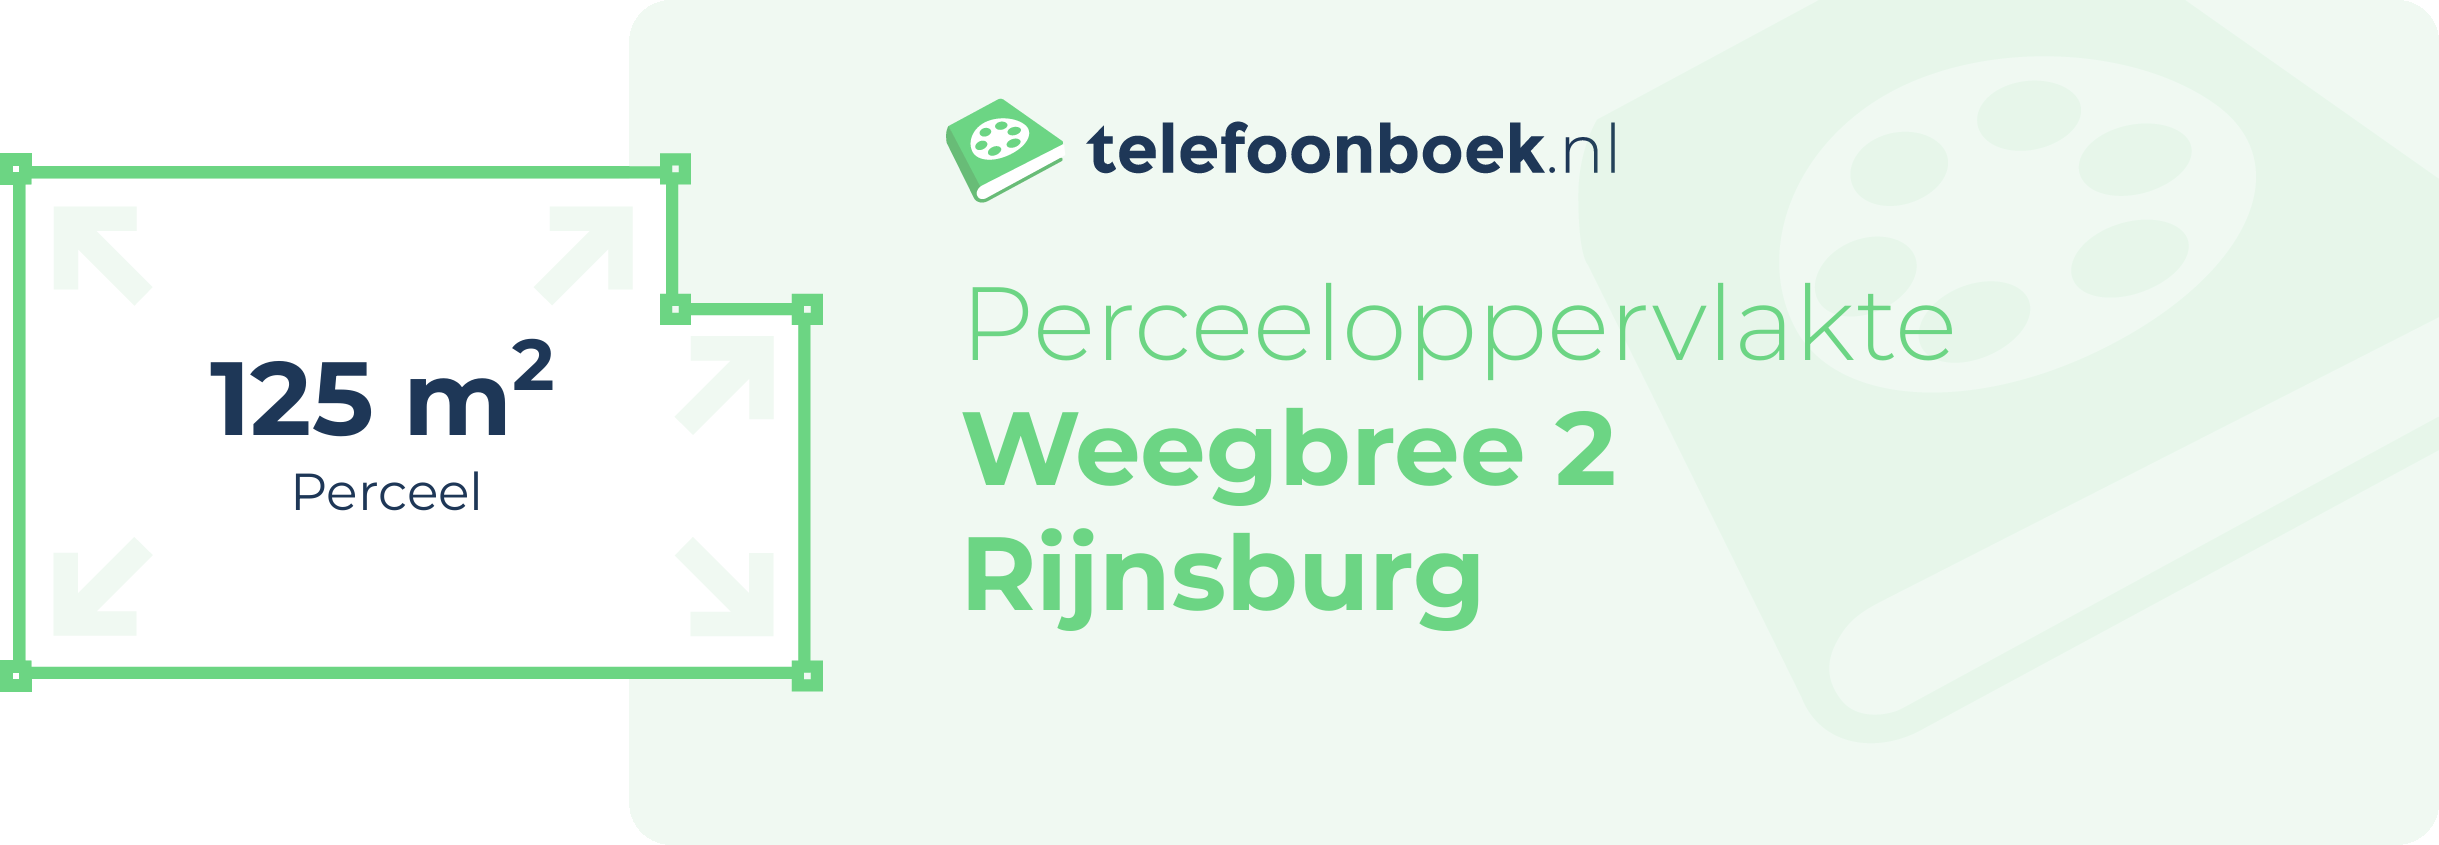 Perceeloppervlakte Weegbree 2 Rijnsburg